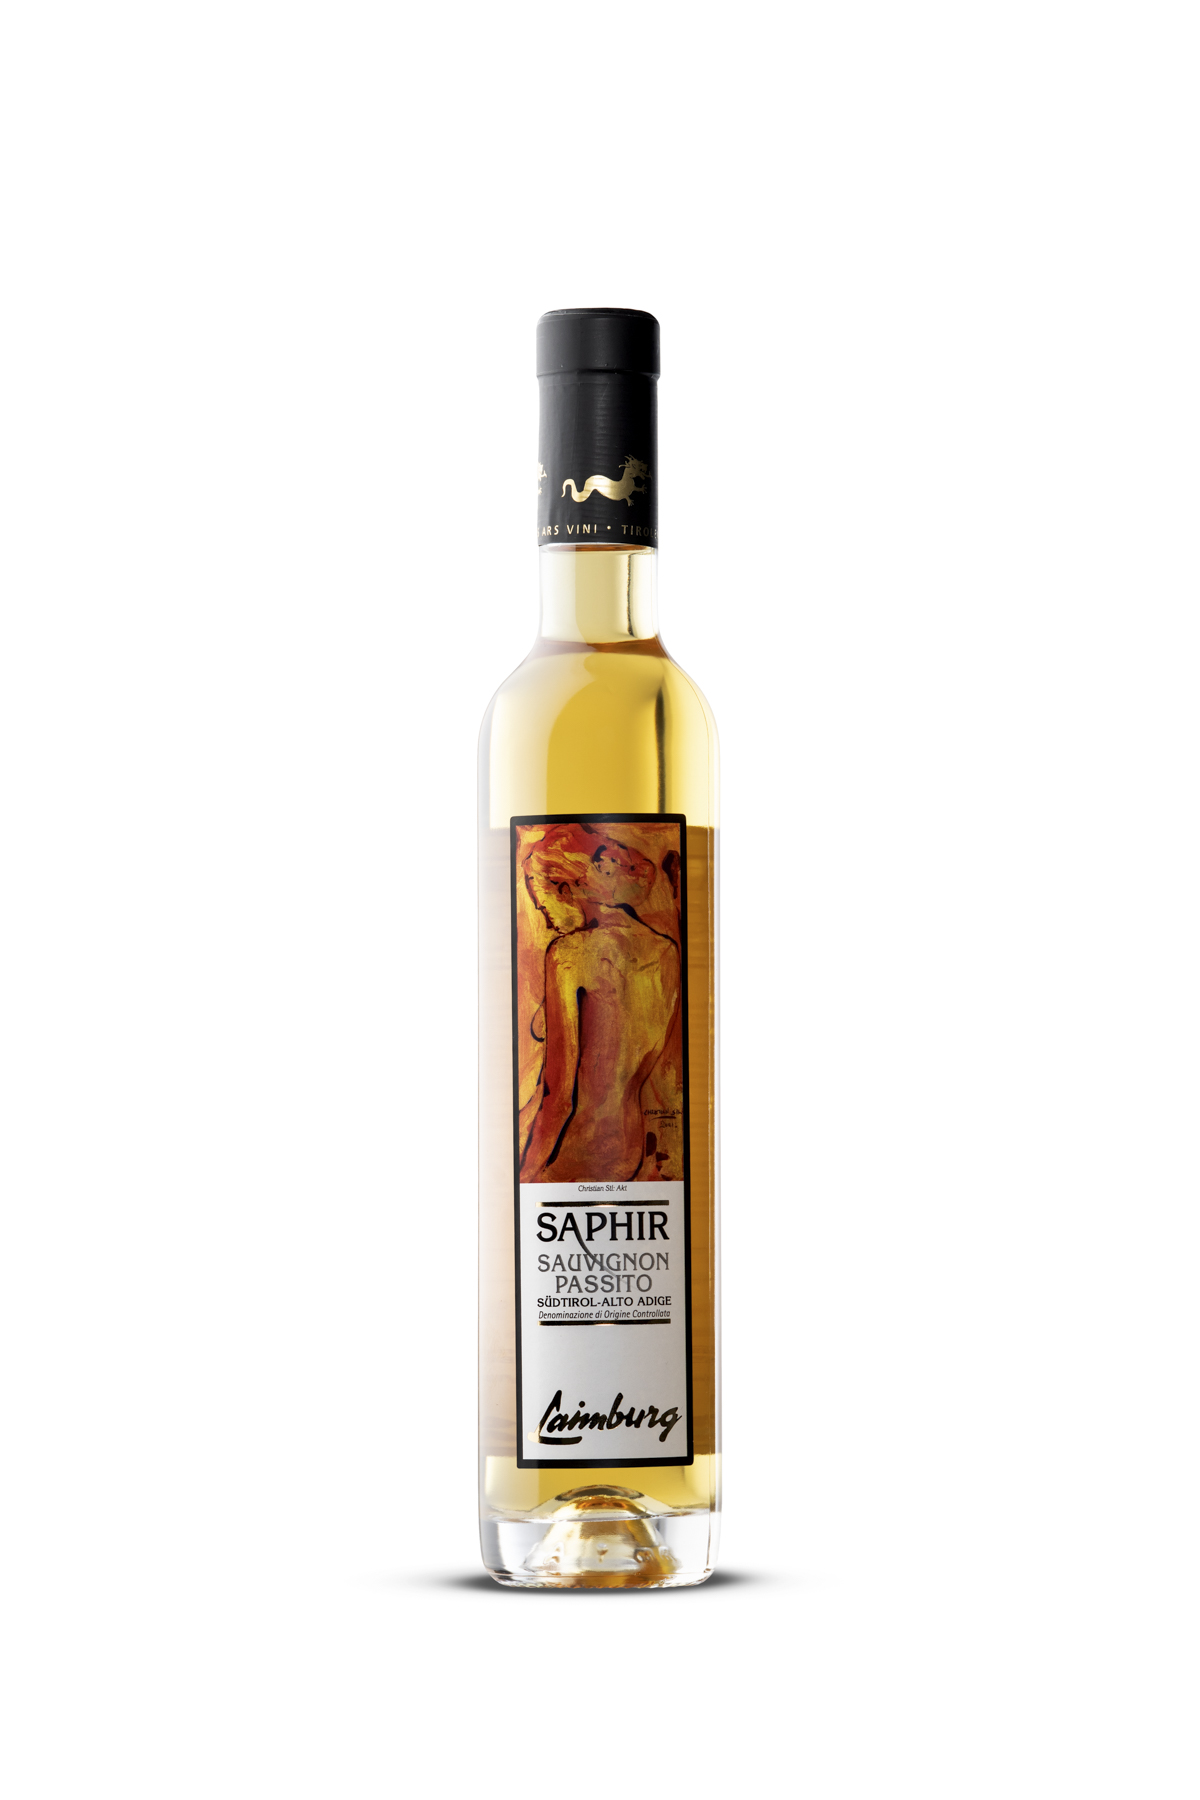 Sauvignon Passito "Saphir" 2018 - Laimburg